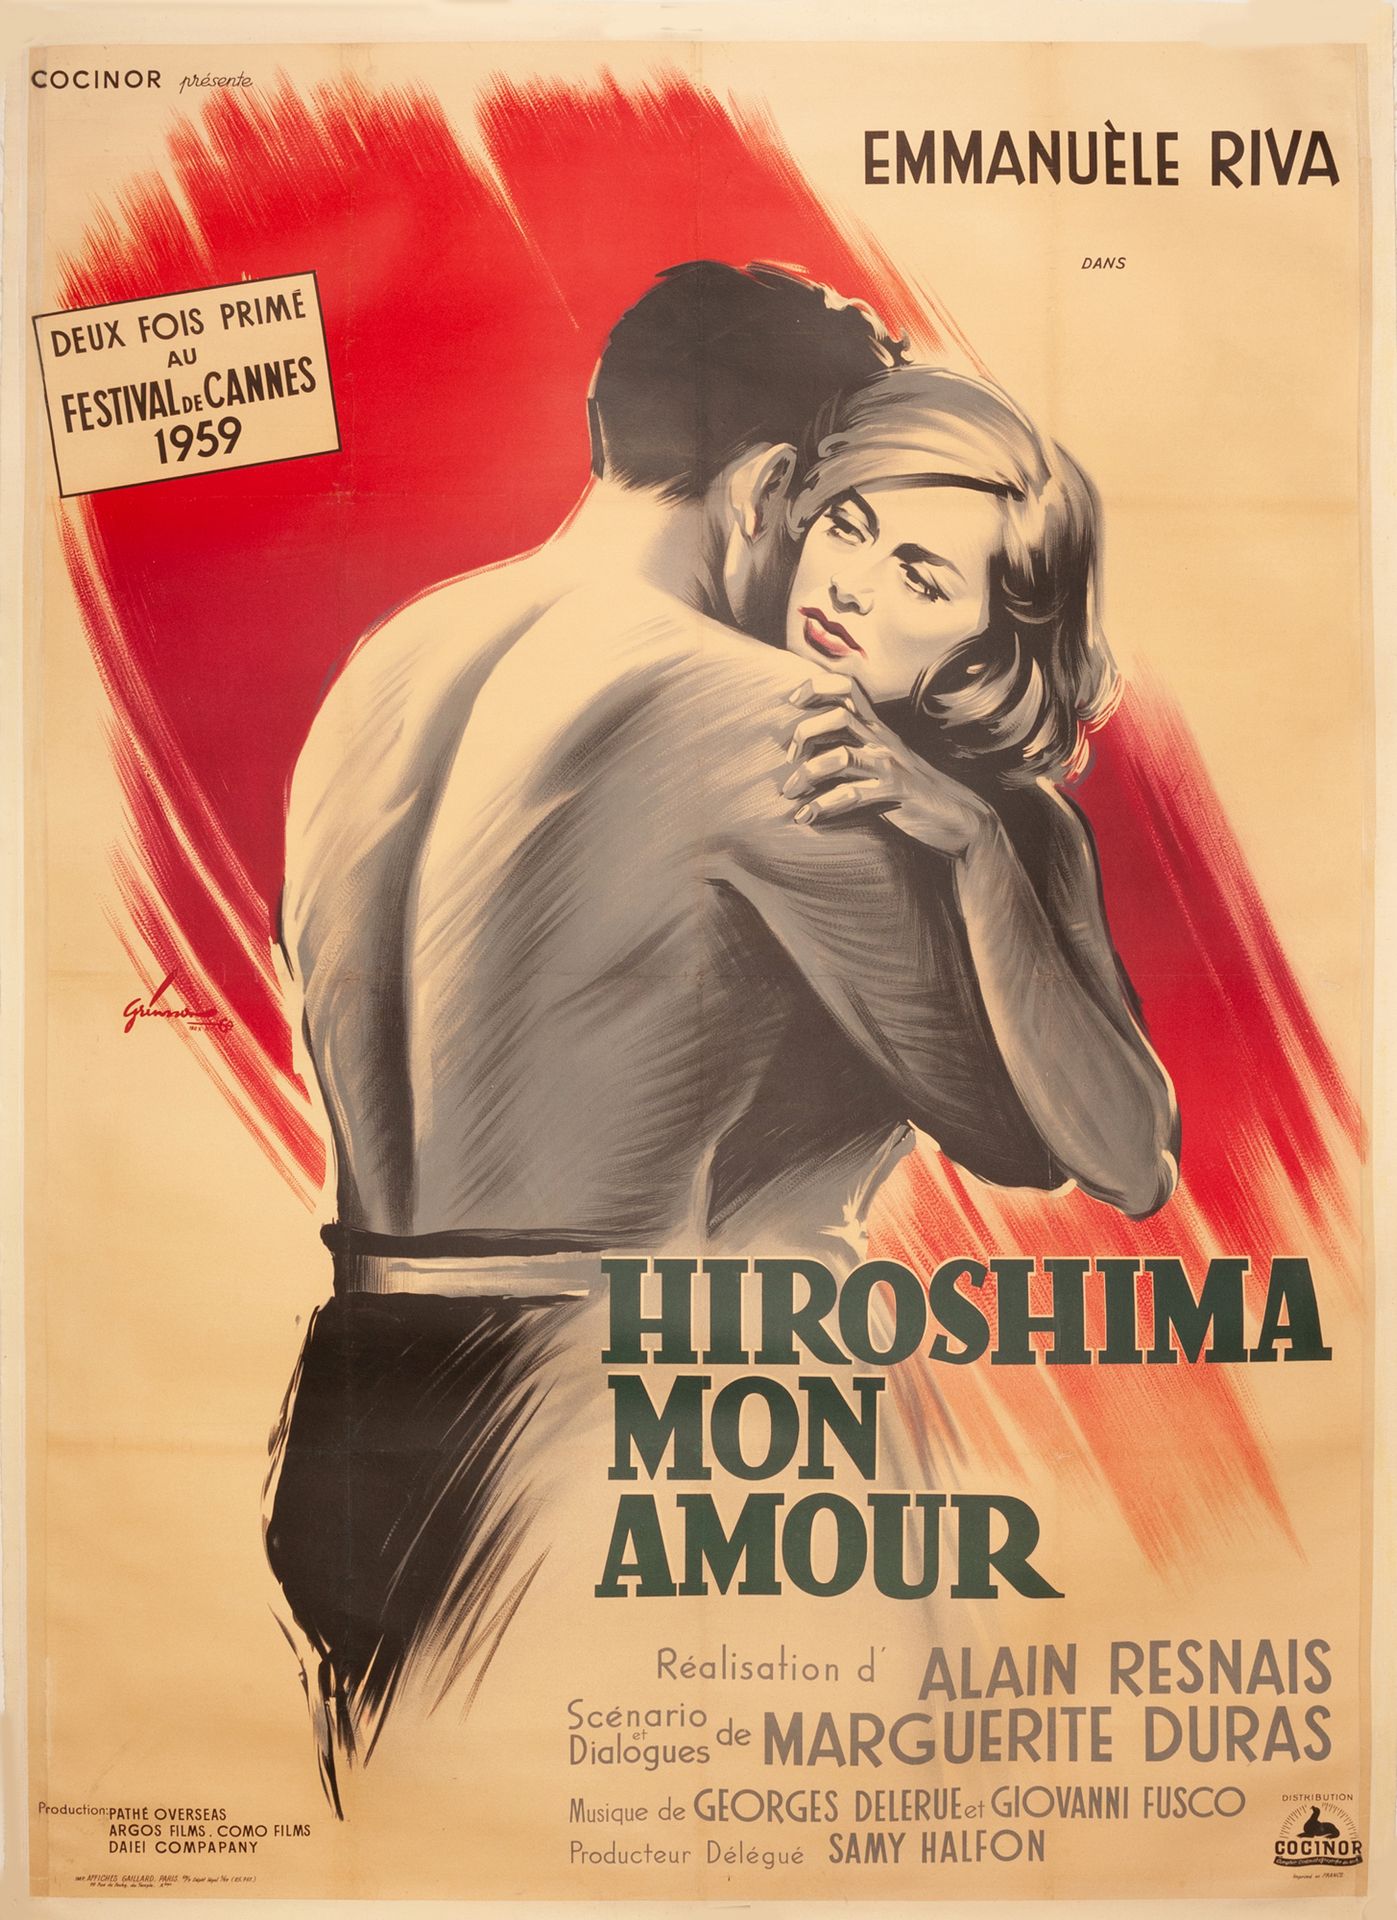 Null HIROSHIMA MON AMOUR Alain Resnais. 1959.
120 x 160 cm. Französisches Plakat&hellip;